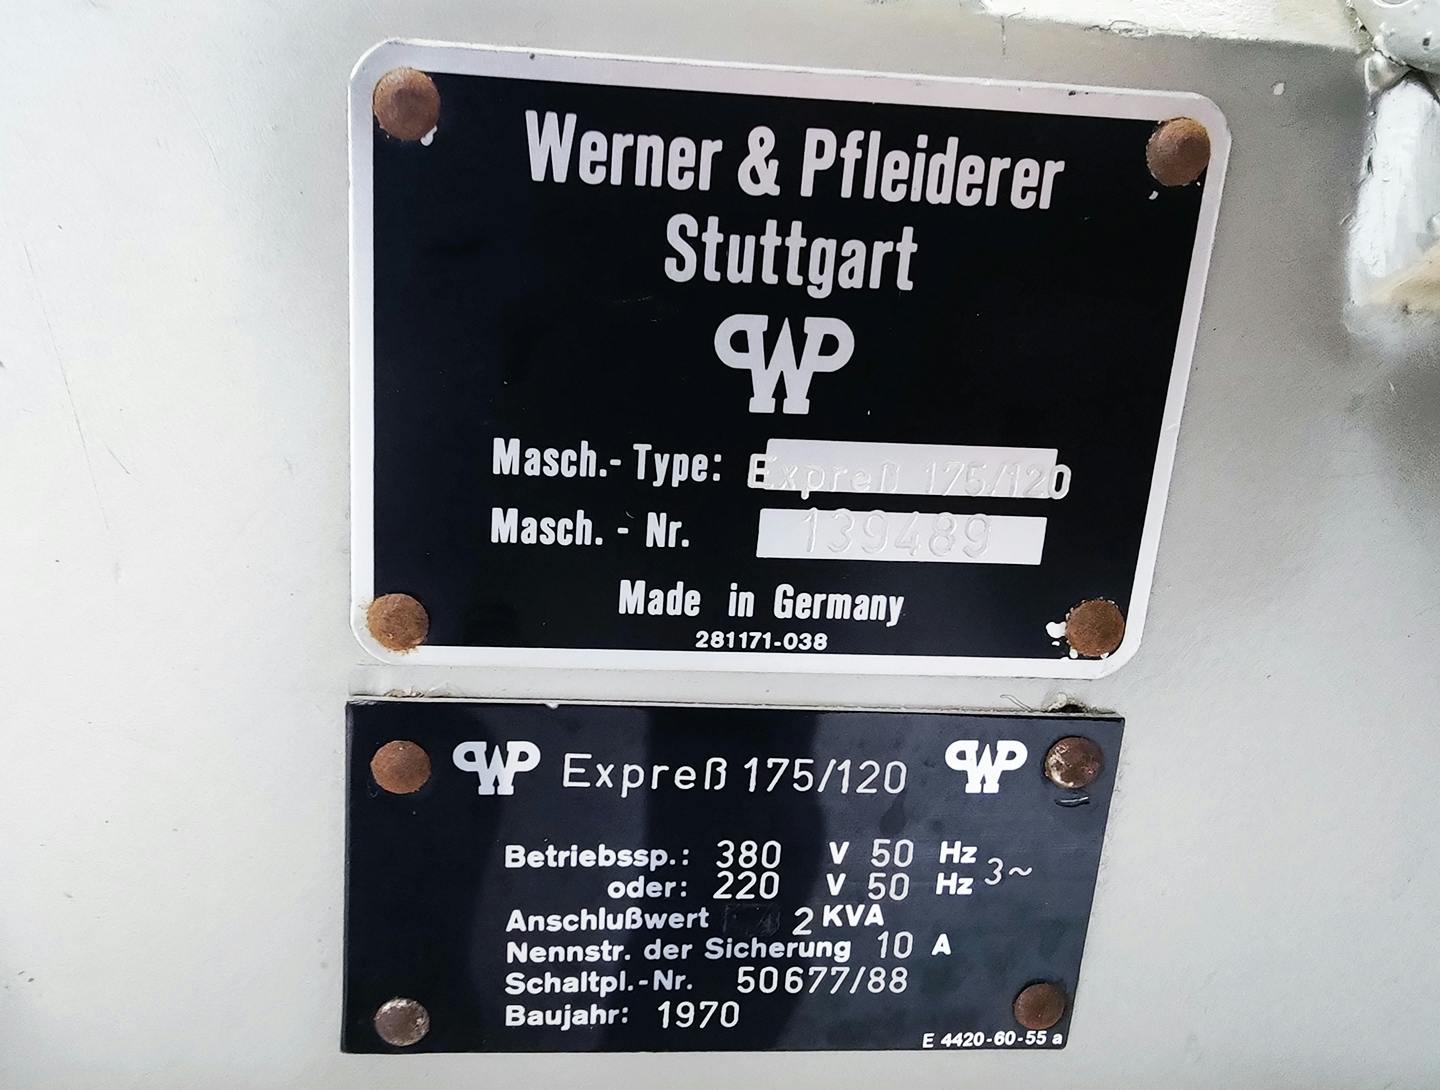 Werner & Pfleiderer Express 175/120 - Doorwrijfzeef - image 9